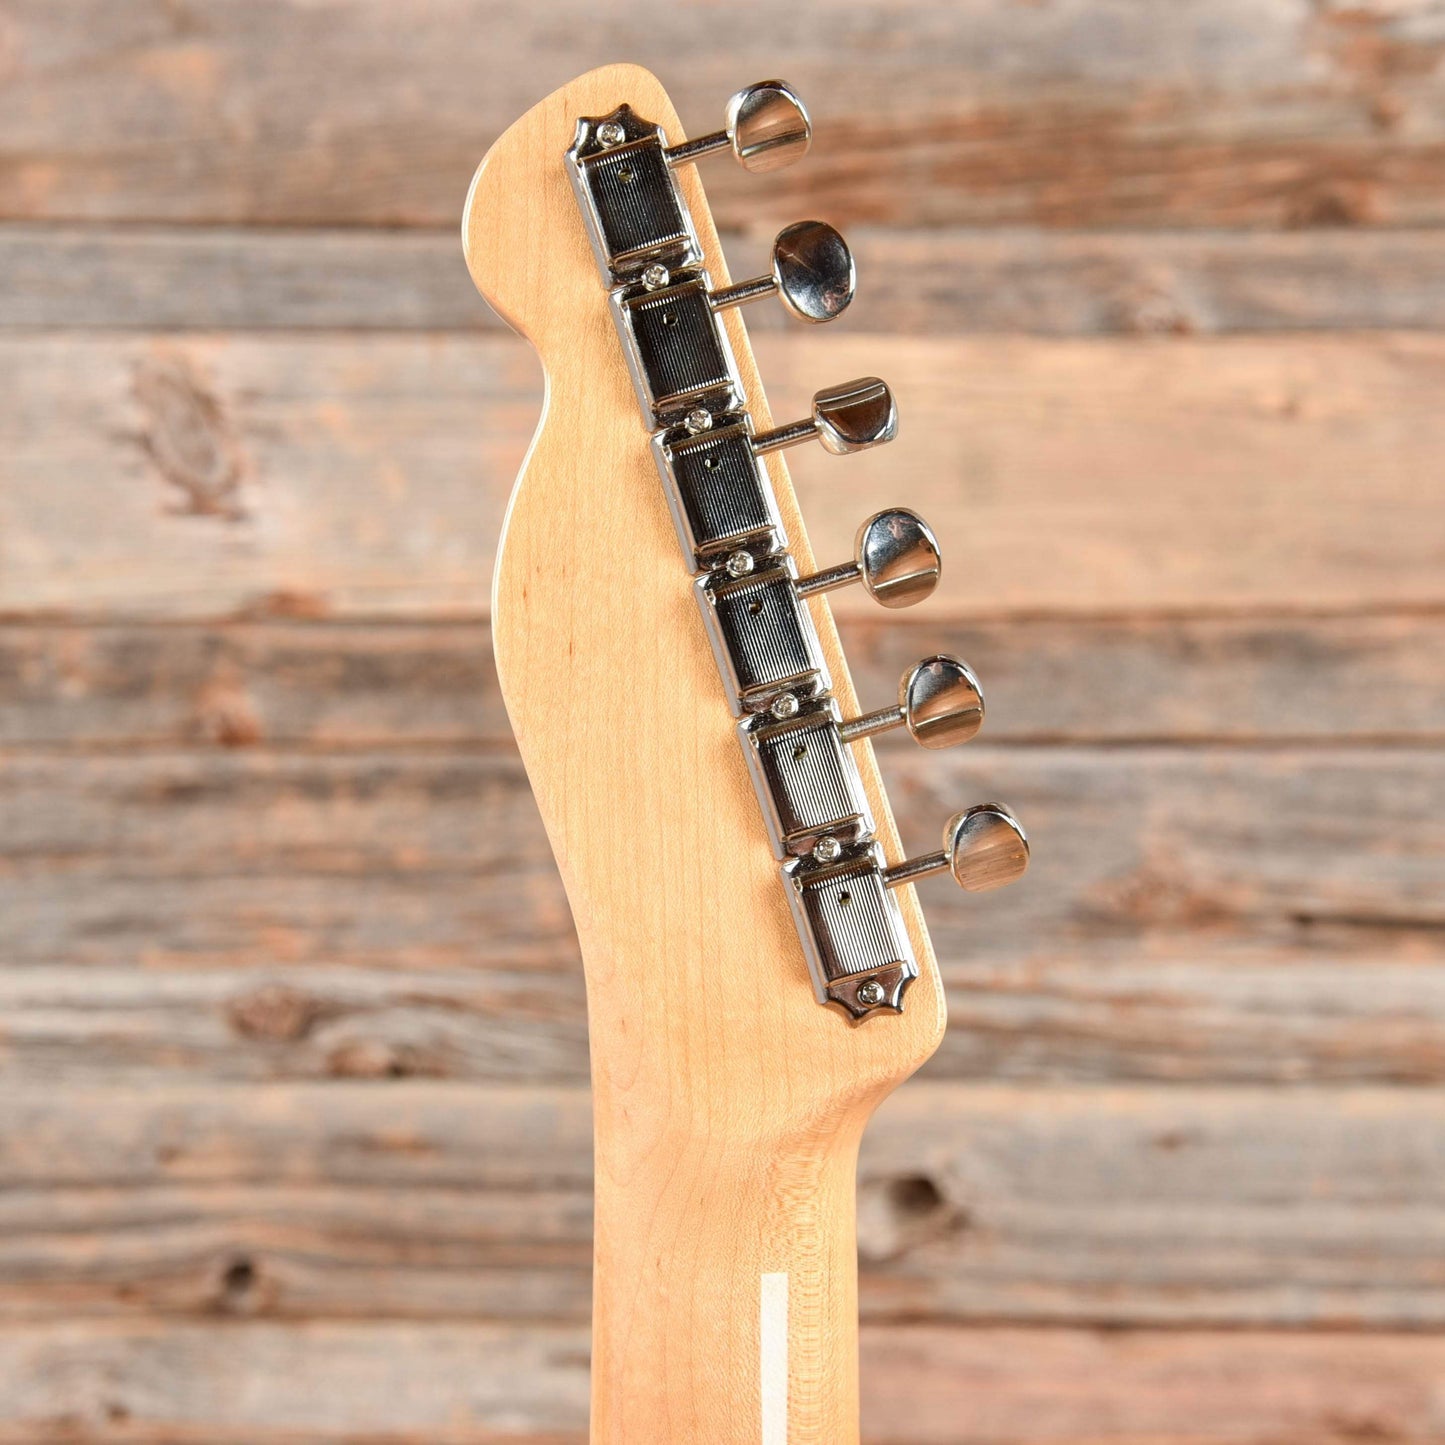 Tokai ATE-98 Butterscotch Blonde Electric Guitars / Solid Body